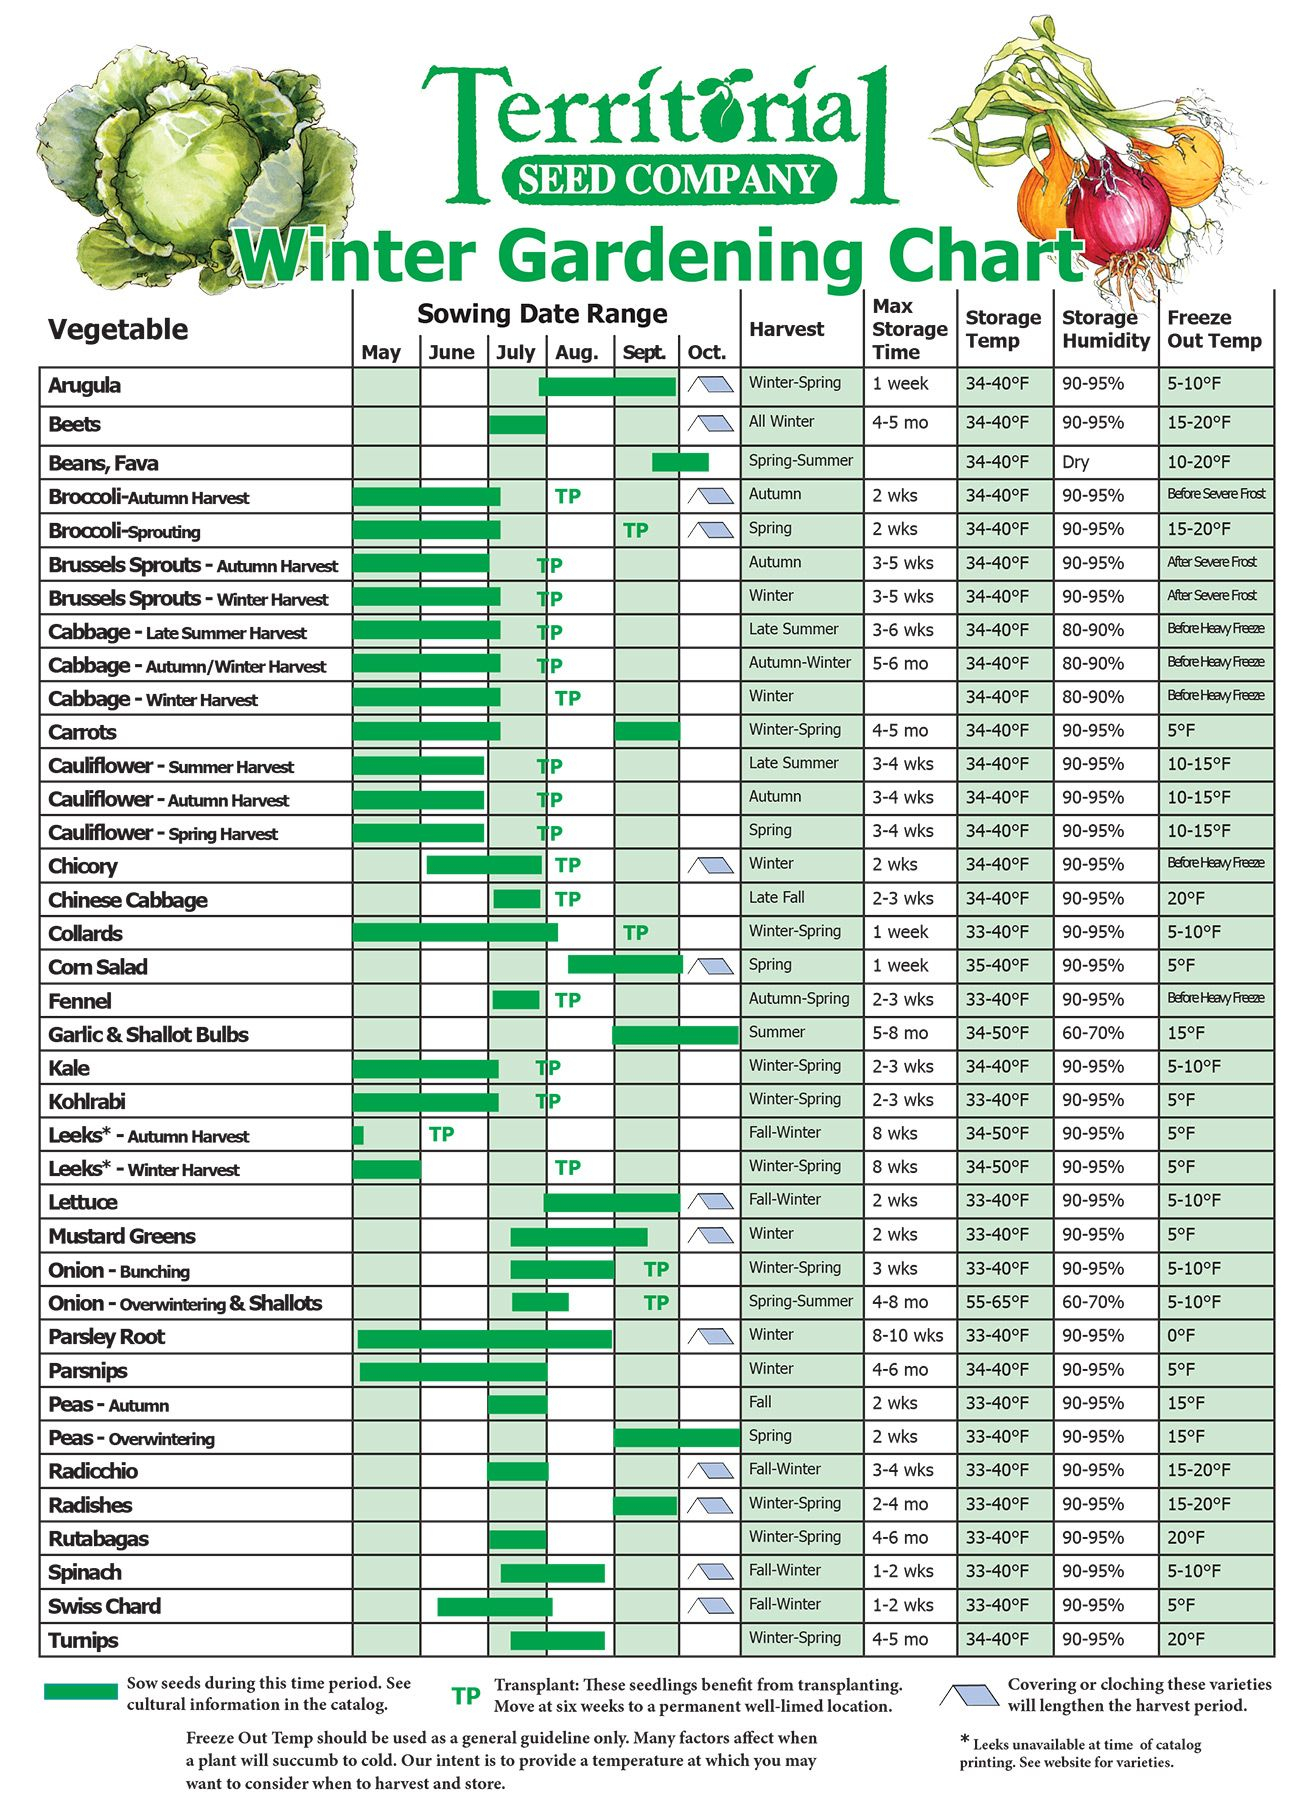 allotment-planting-calendar-calendar-for-planning